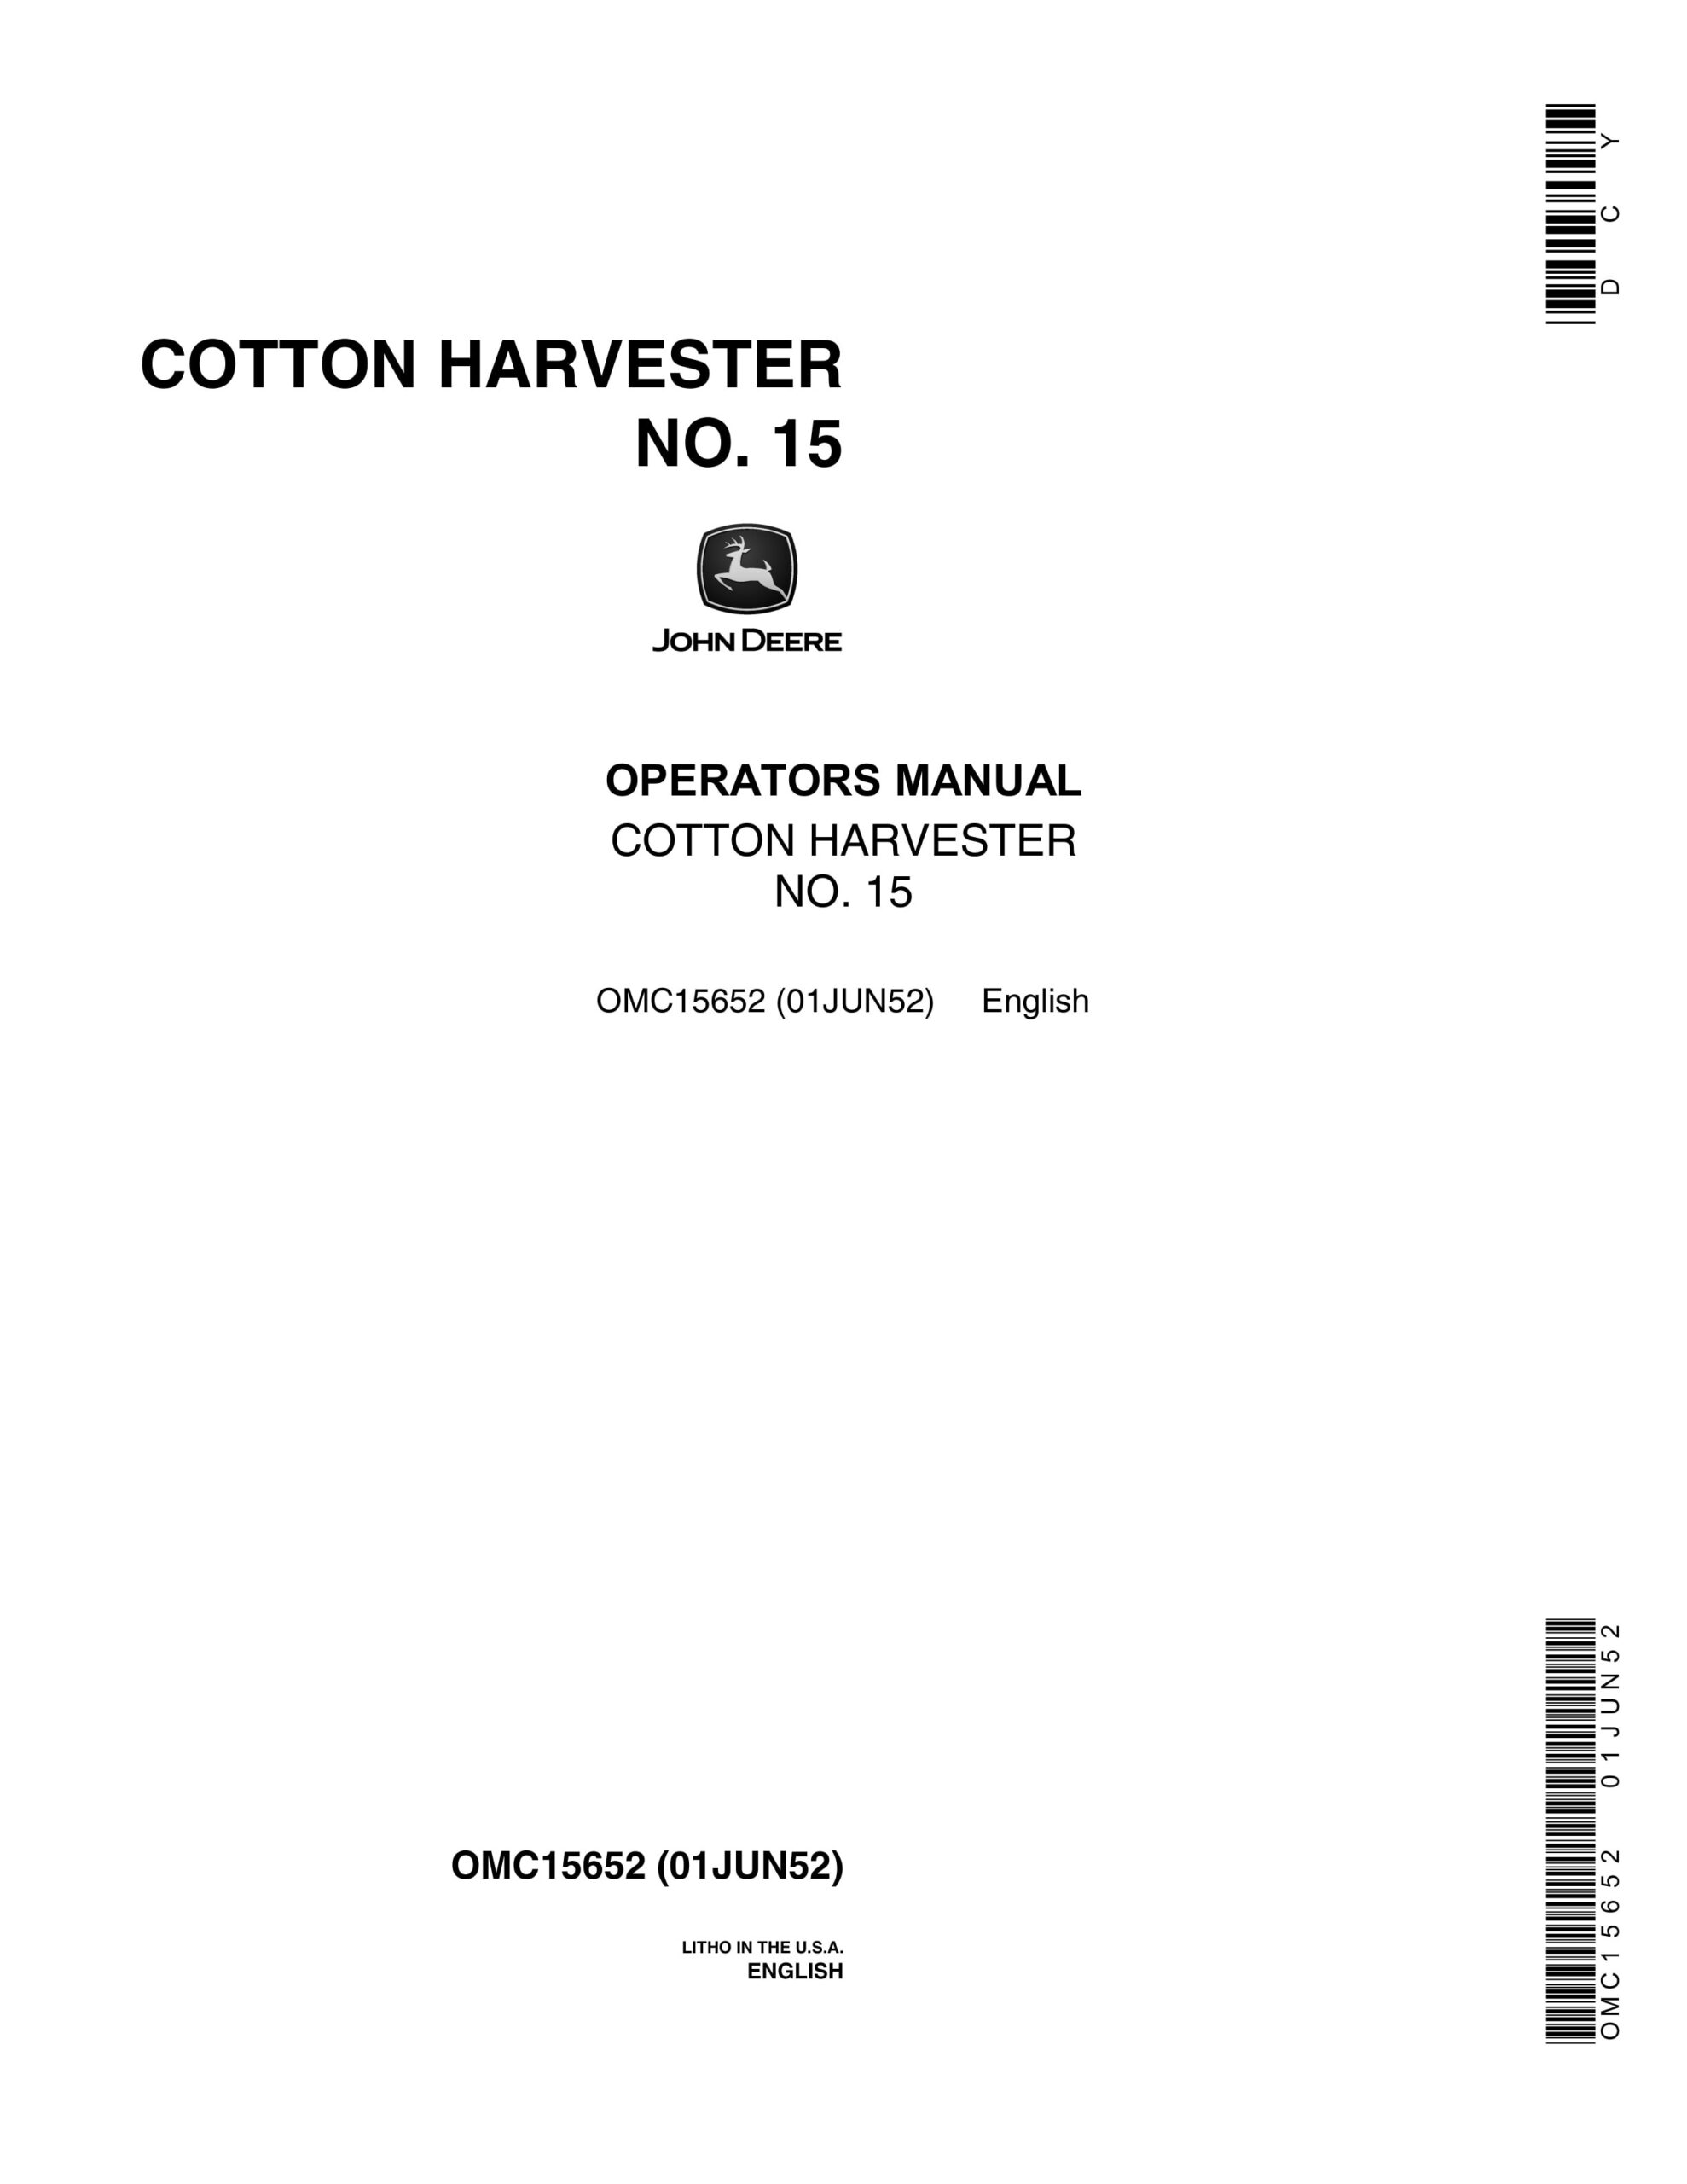 John Deere NO. 15 COTTON HARVESTERS Operator Manual OMC15652-1